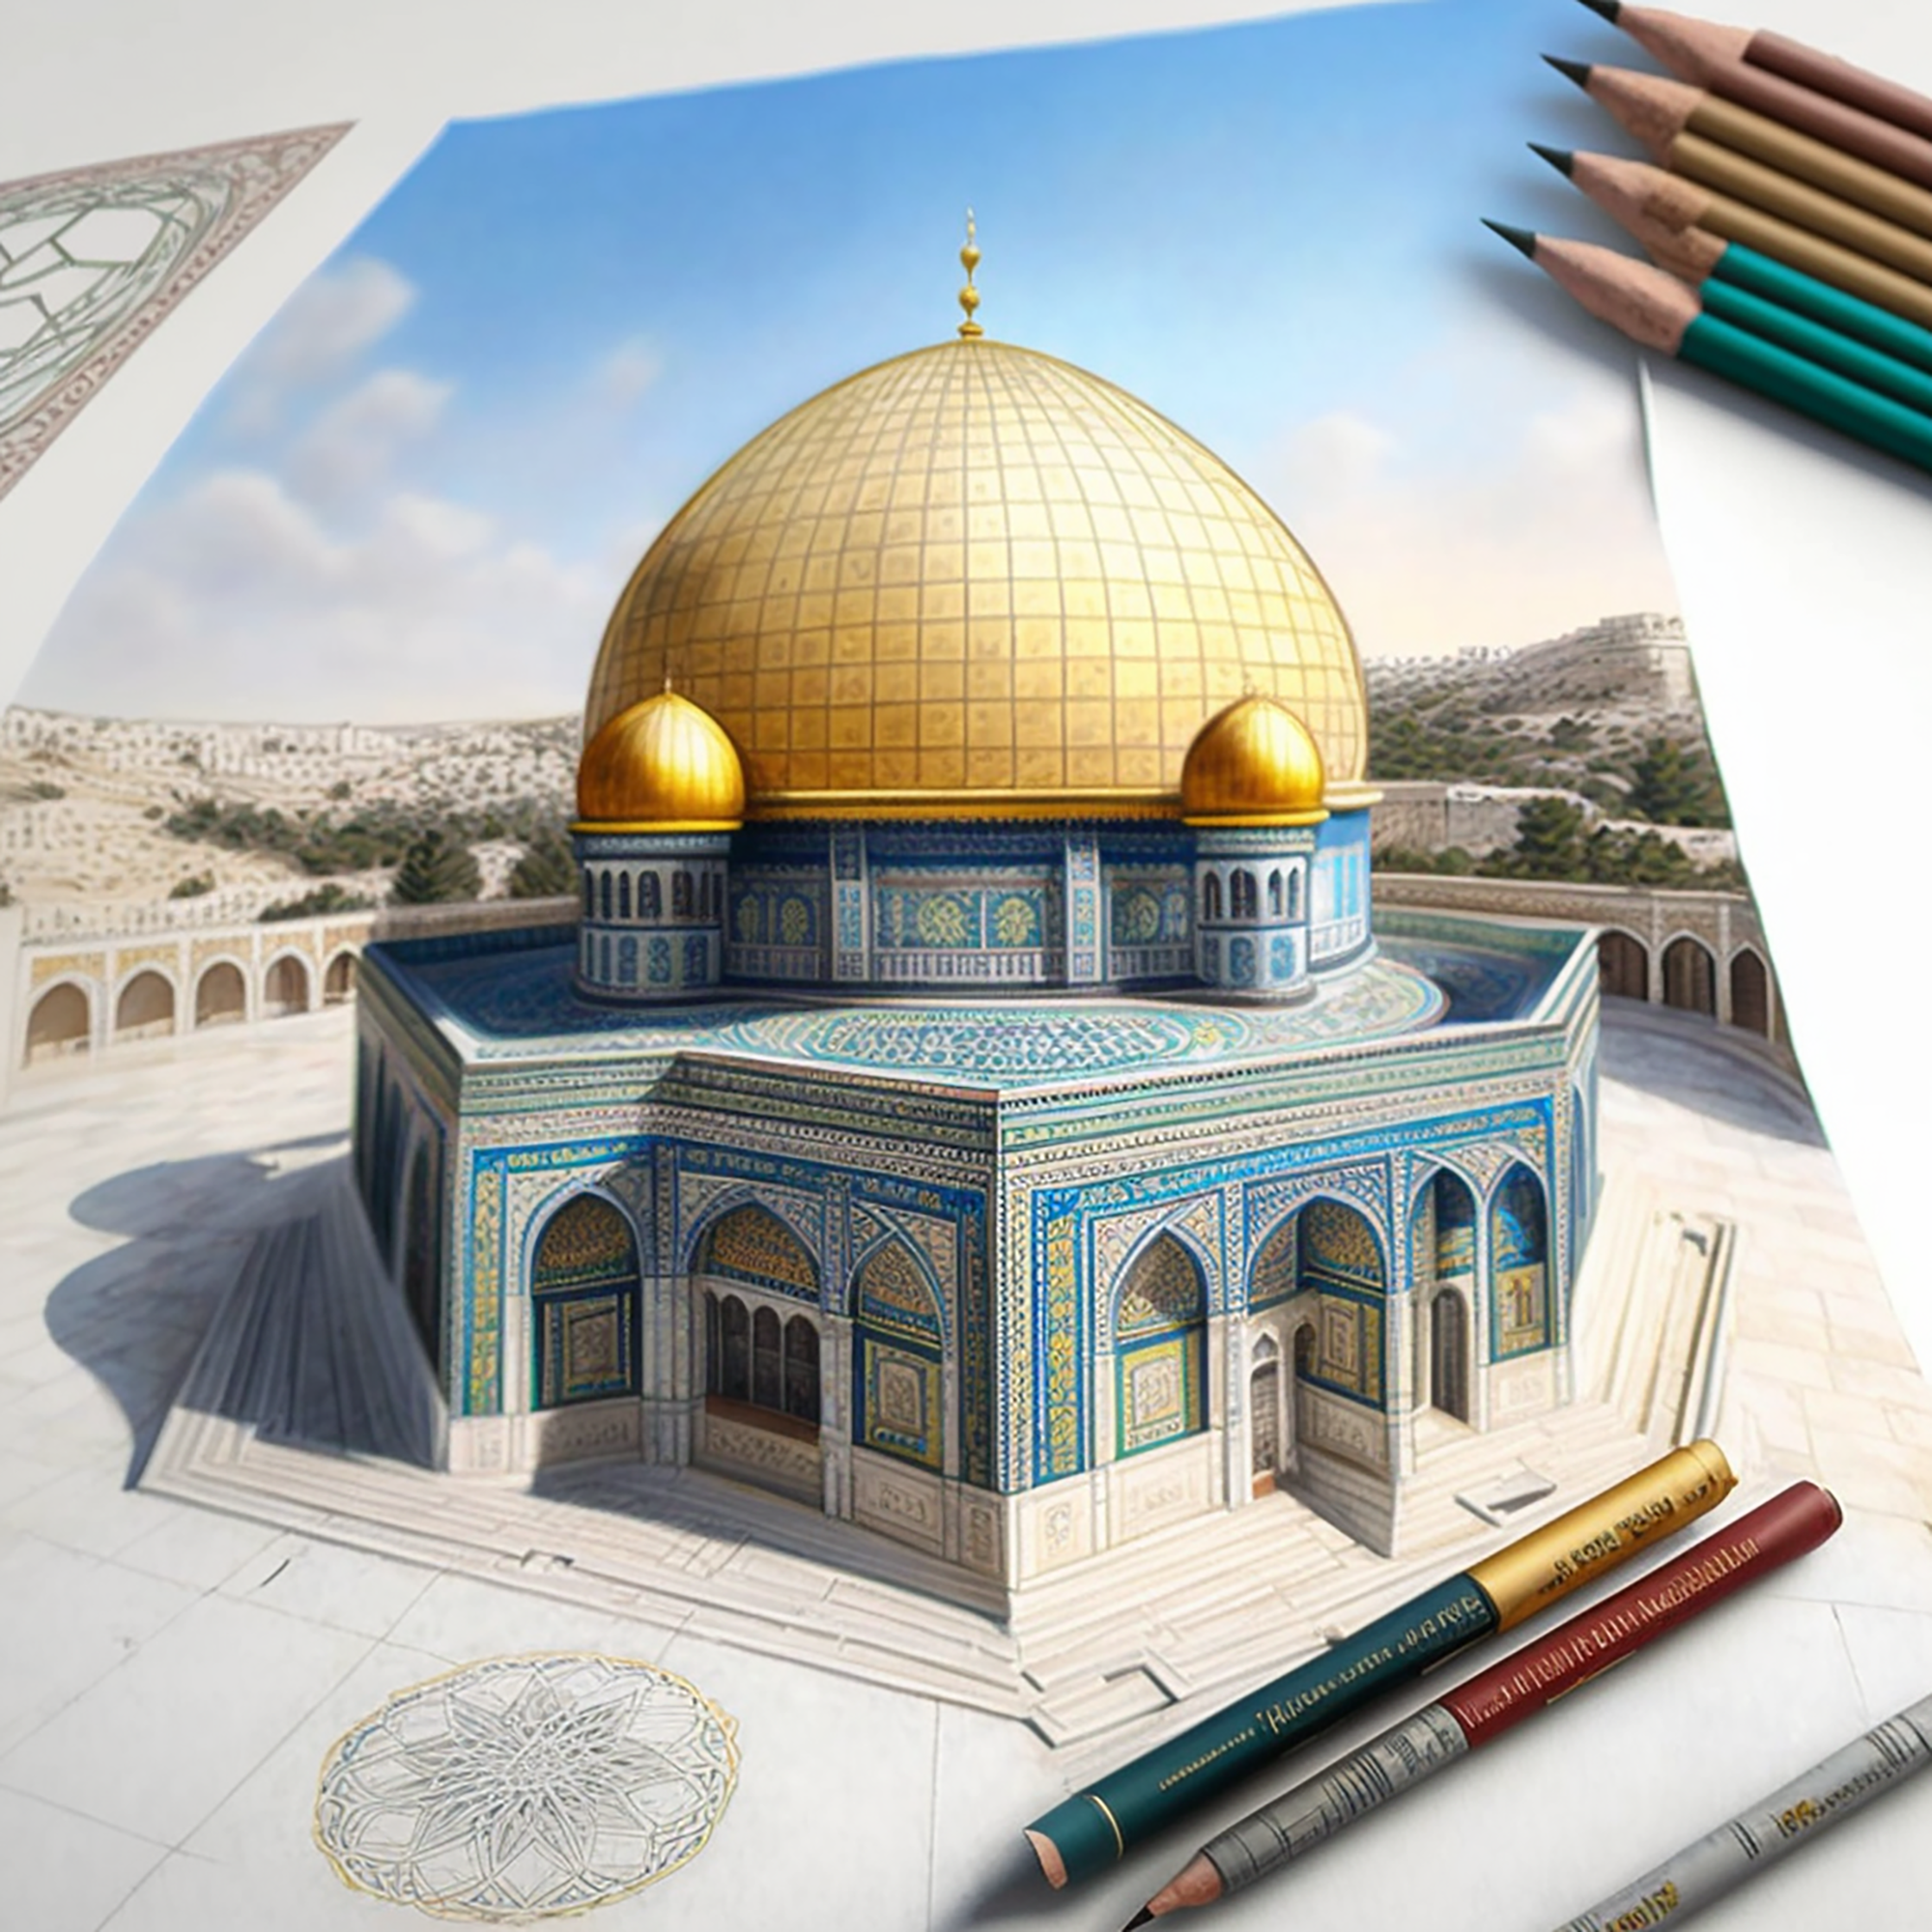 3101-Temple Mount in Jerusalem, coloring book